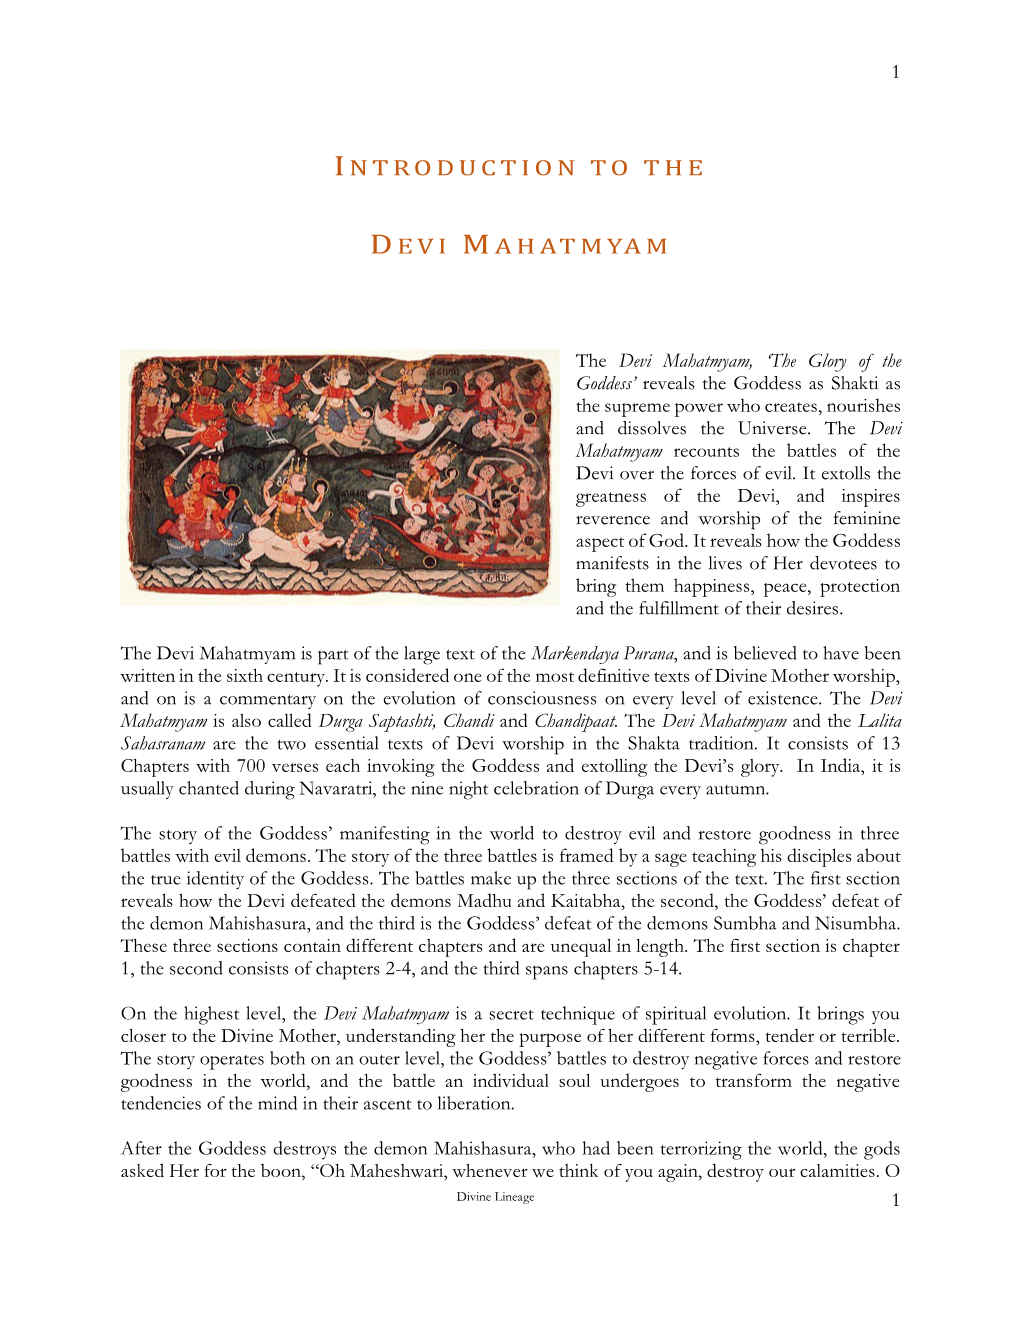 Introduction to the Devi Mahatmyam